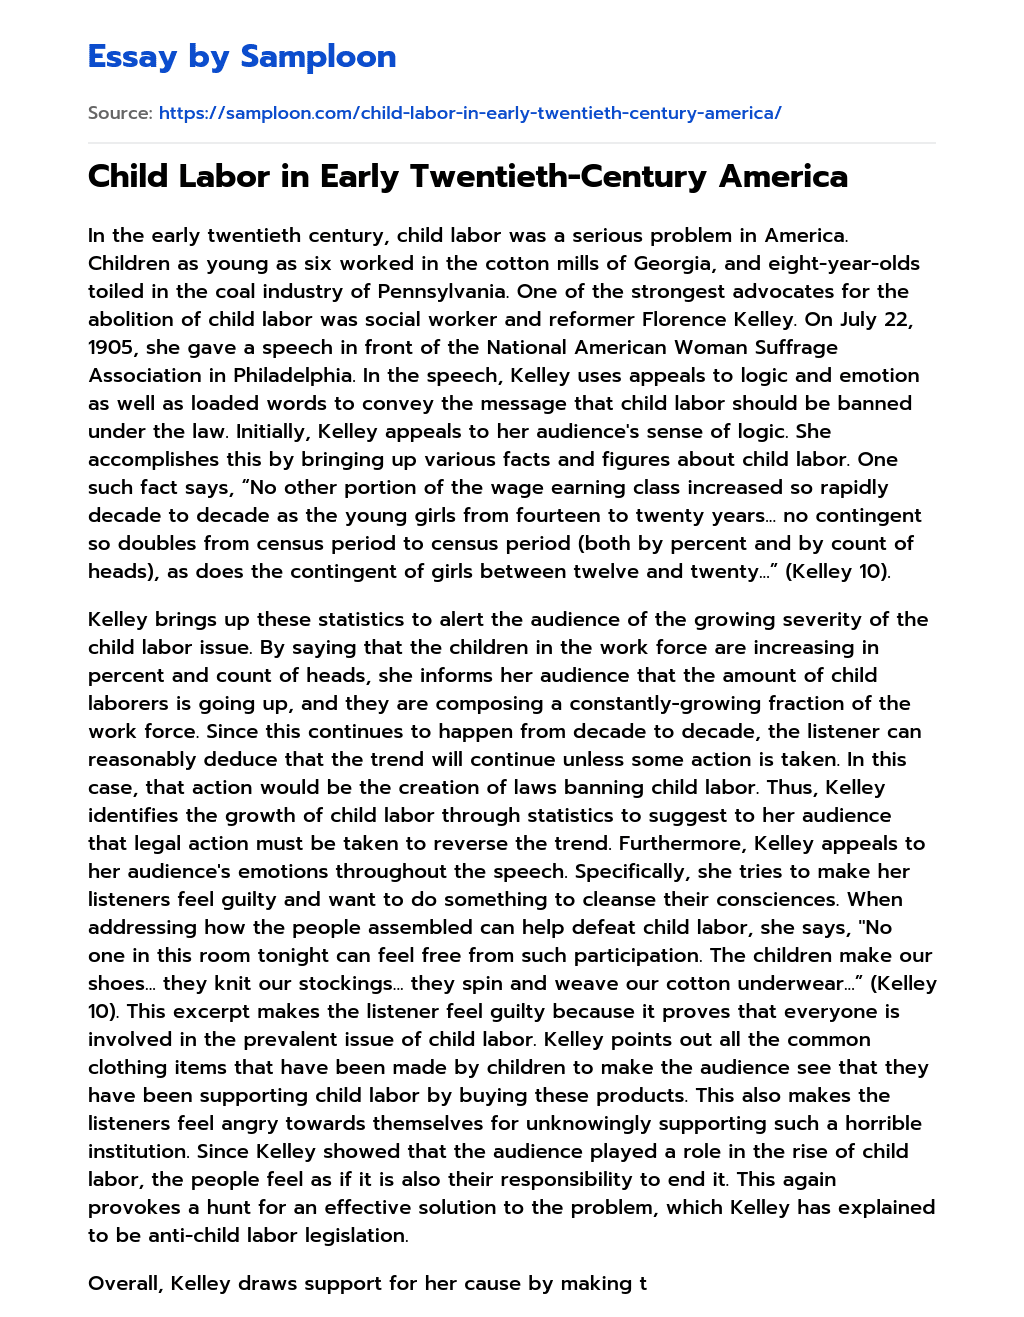 Child Labor in Early Twentieth-Century America essay